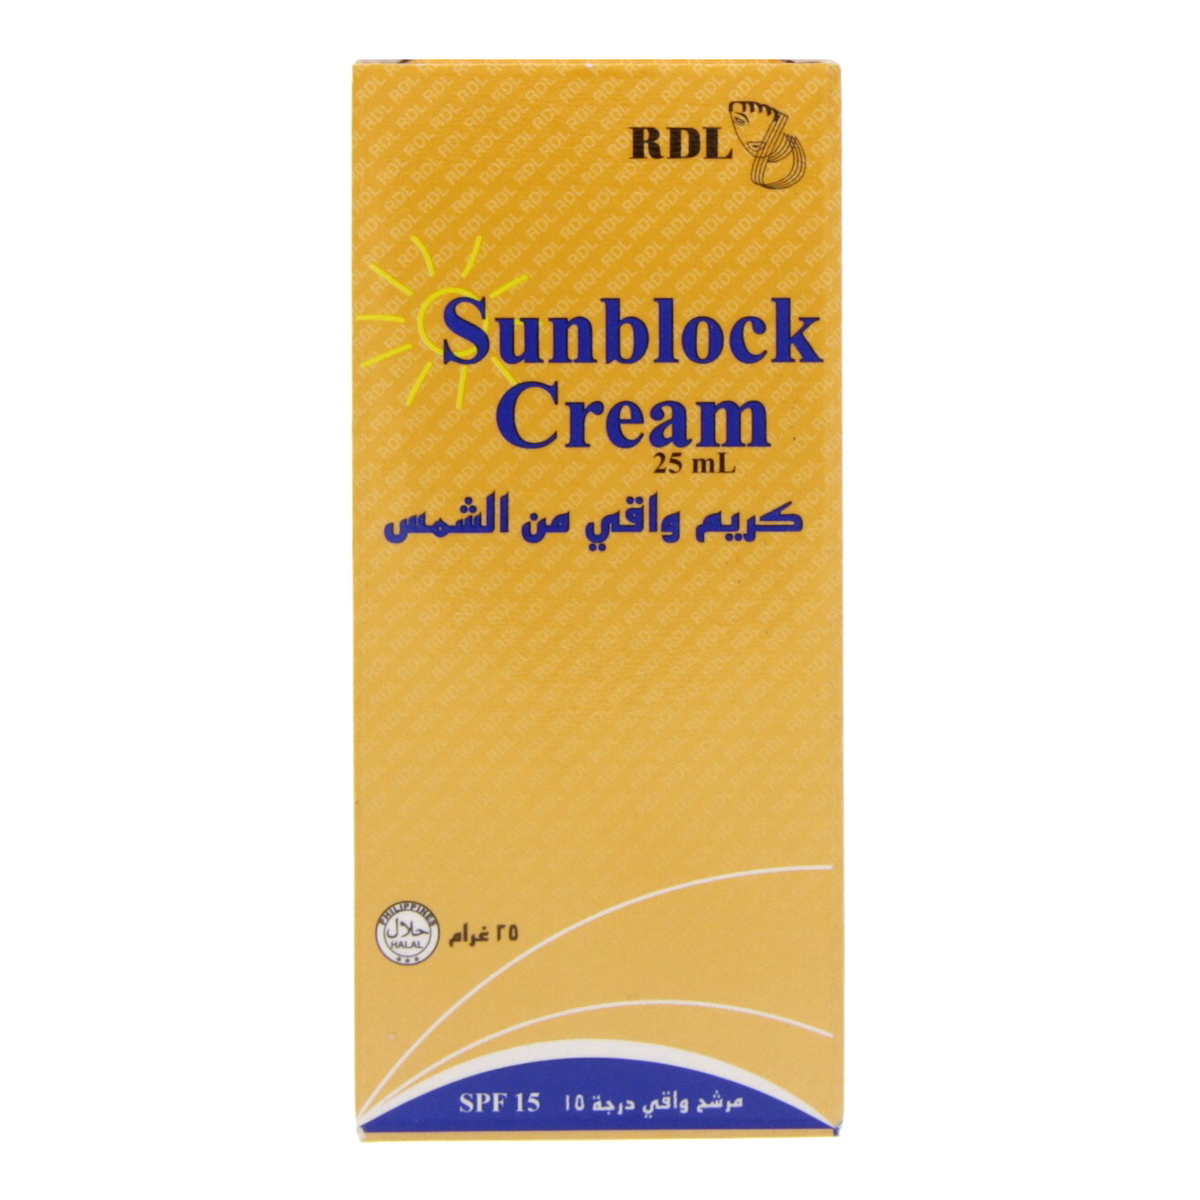 Rdl Sunblock Cream Spf15 25 ml